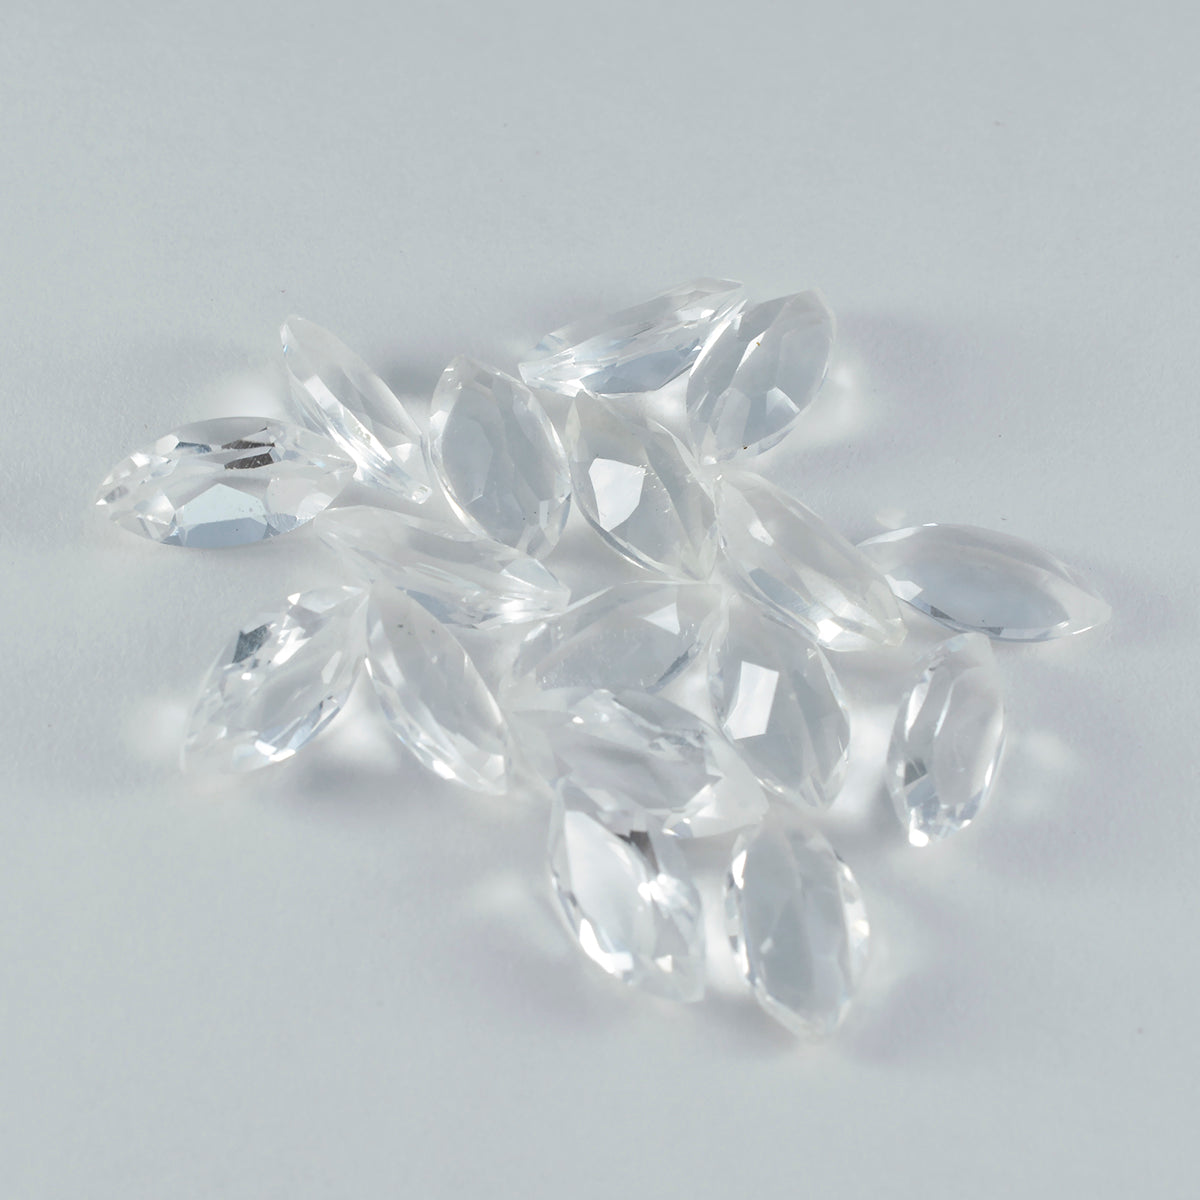 riyogems 1 st vit kristall kvarts fasetterad 7x14 mm markis form a+1 kvalitetssten